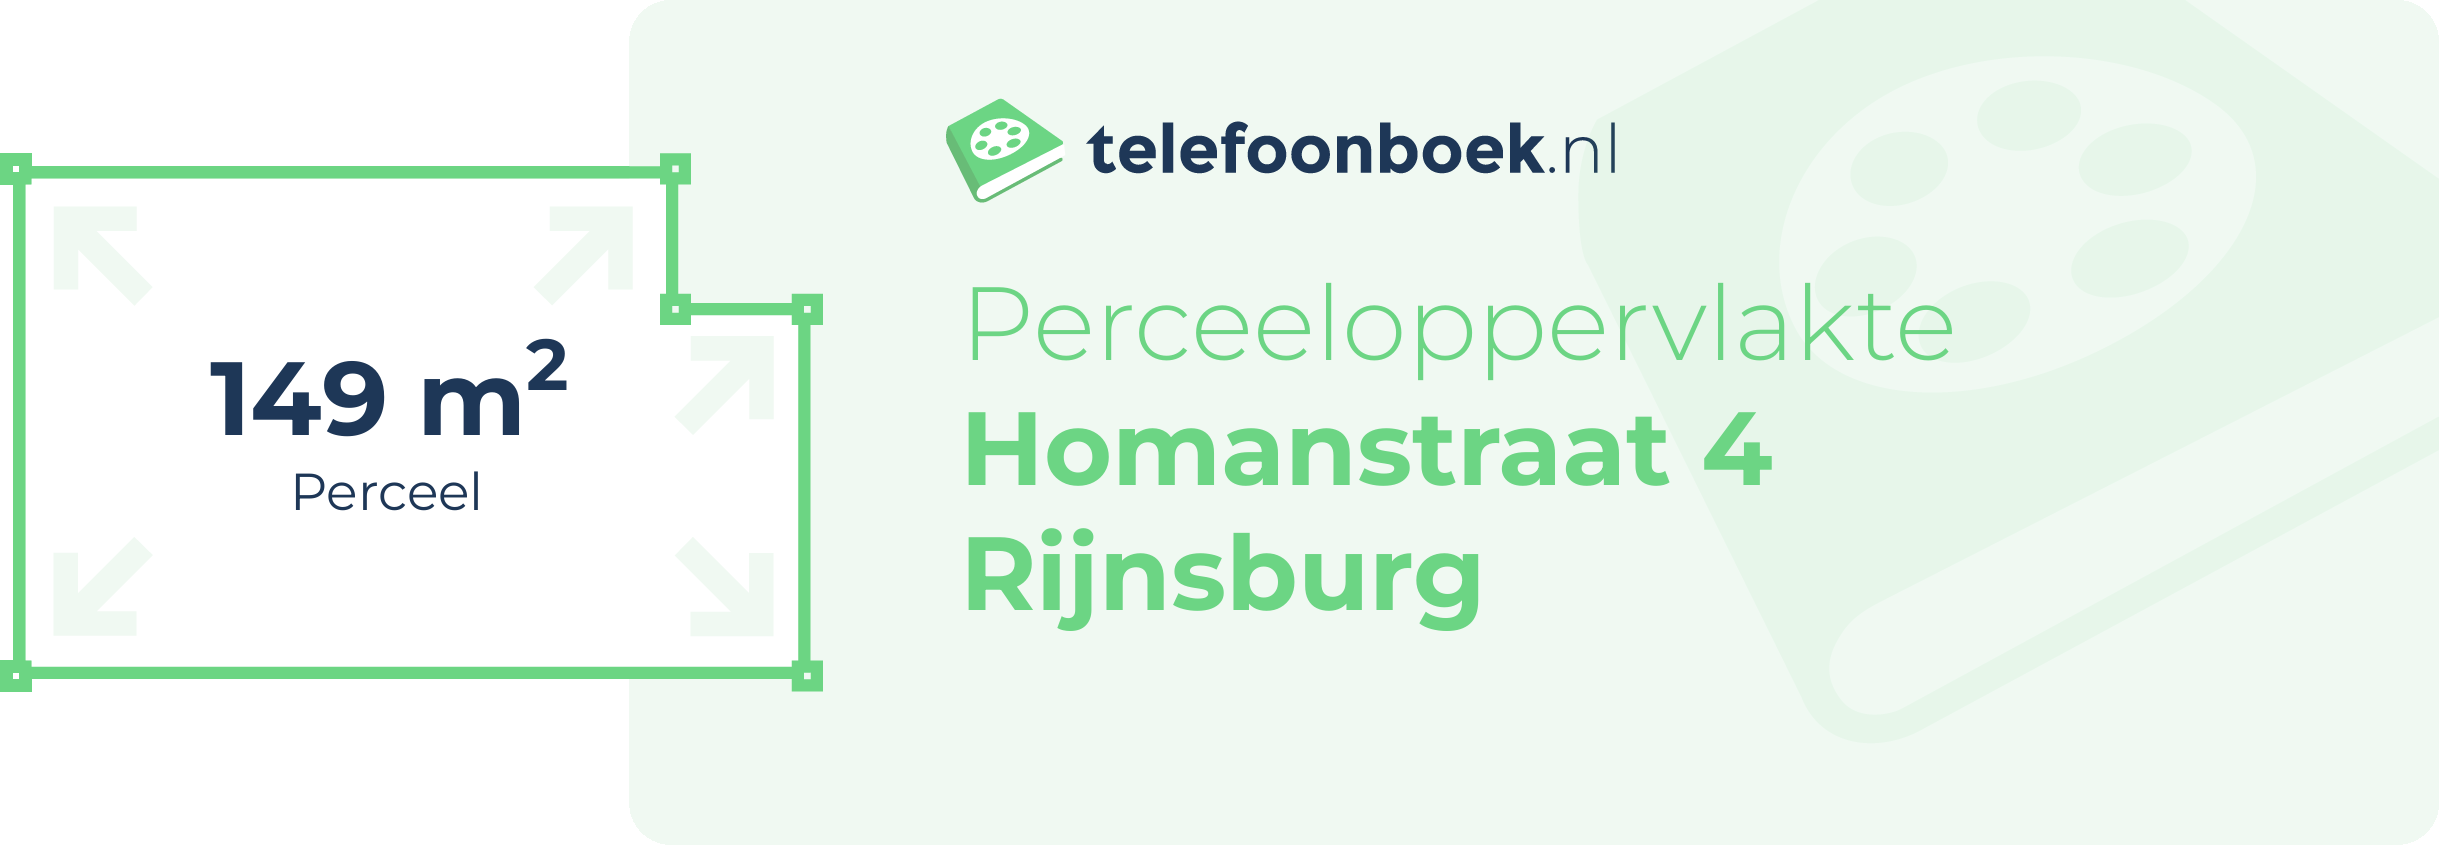 Perceeloppervlakte Homanstraat 4 Rijnsburg